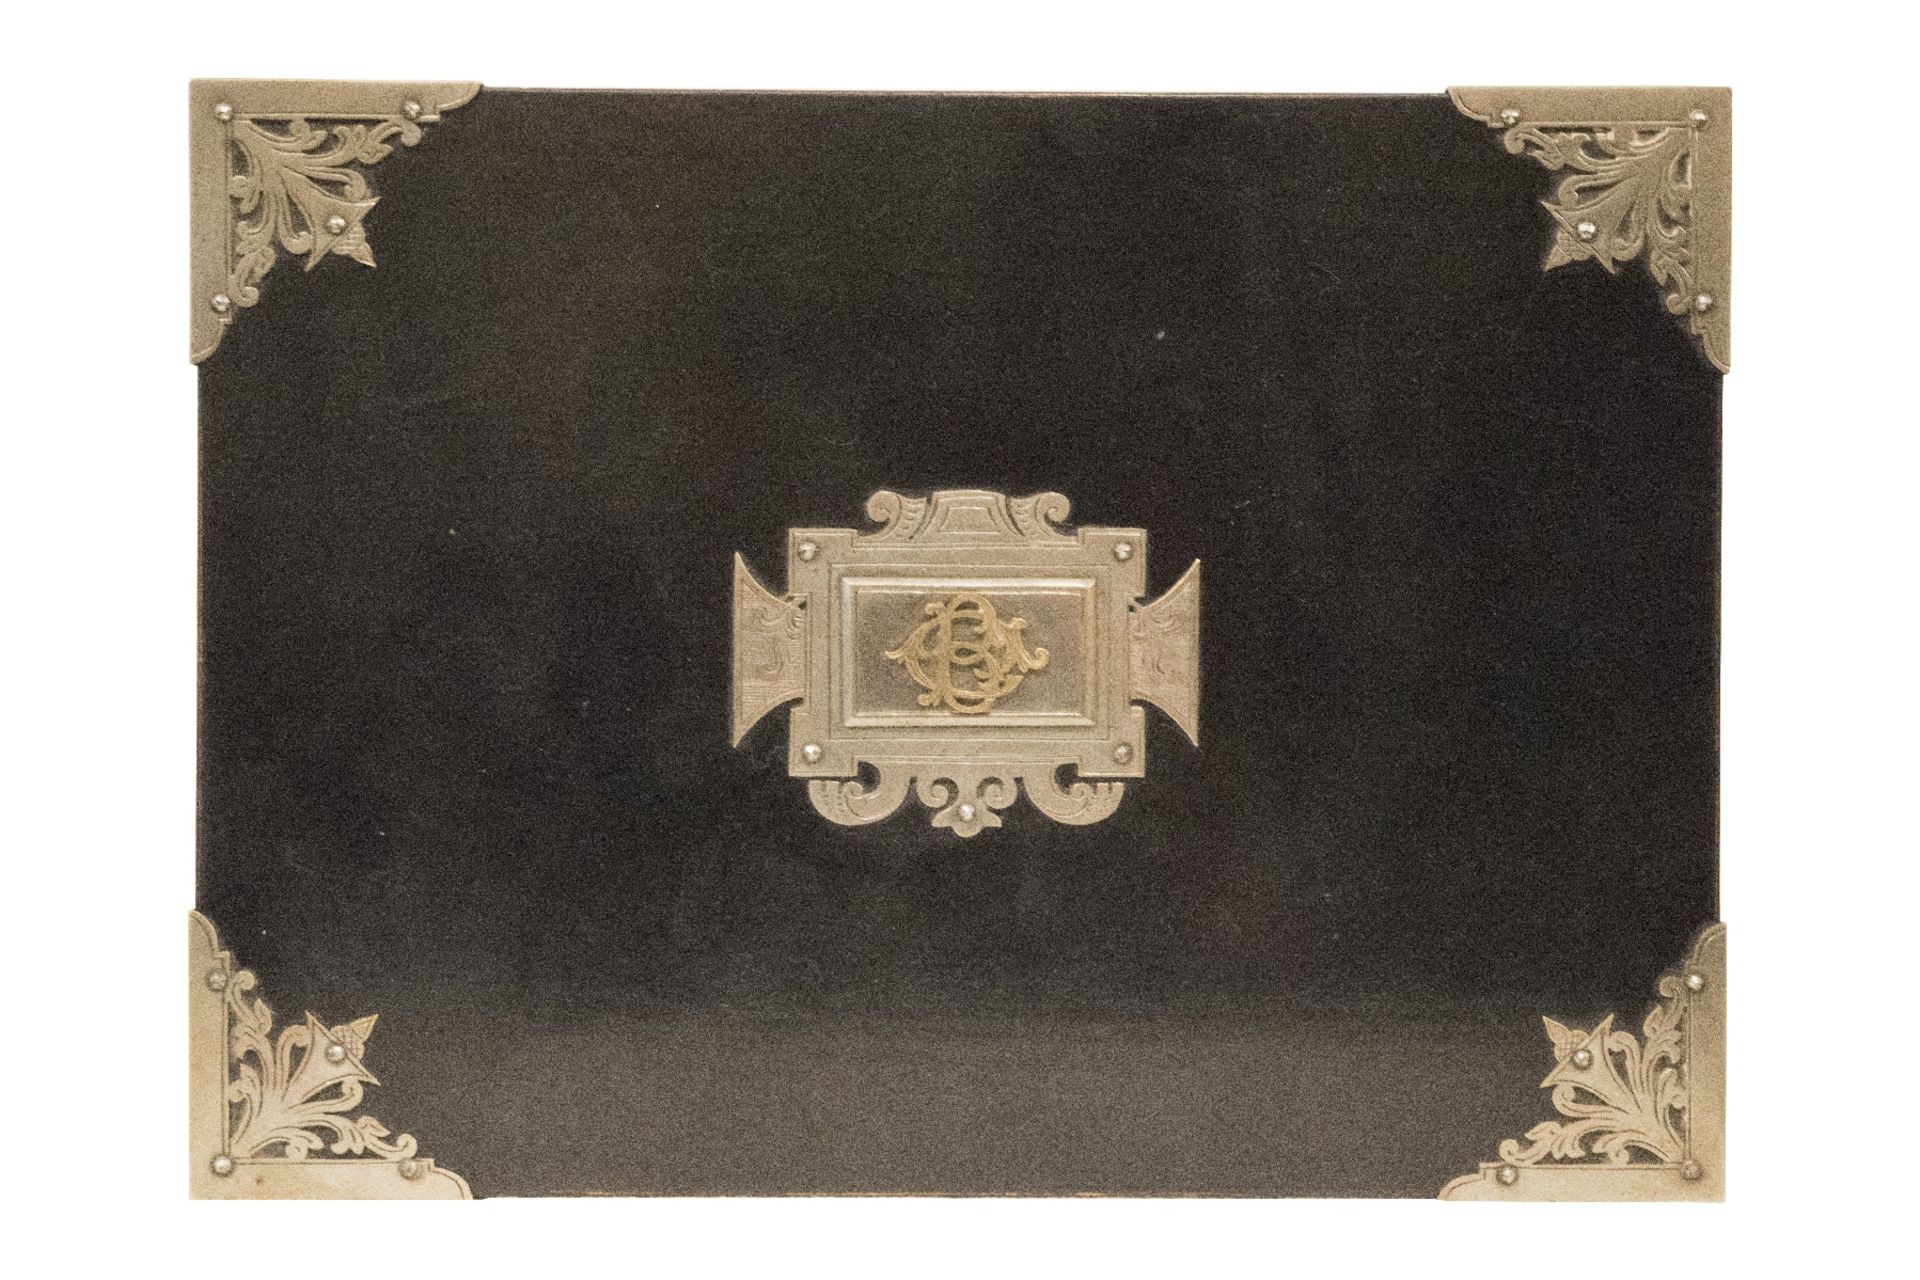 Holzschatulle mit Metallbeschlaegen | Wooden casket with metal fittings - Image 6 of 9